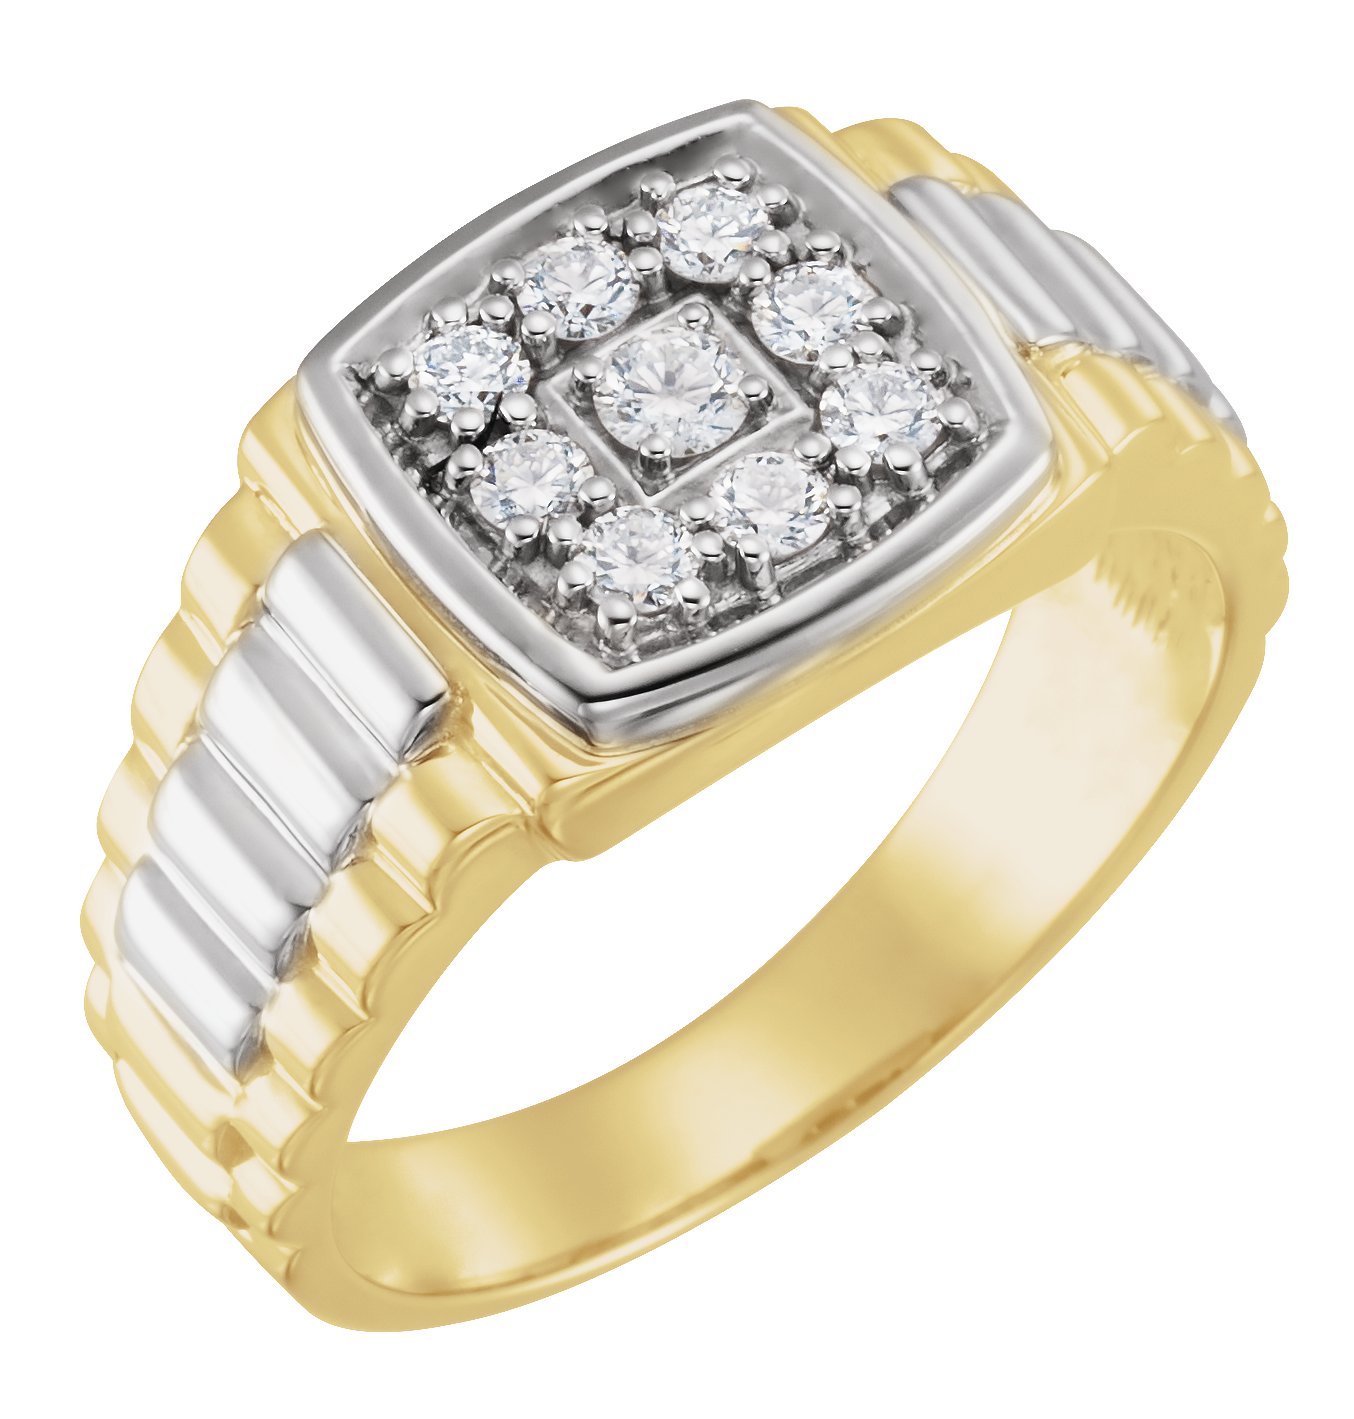 14K Yellow/White 3/8 CTW Diamond Ring